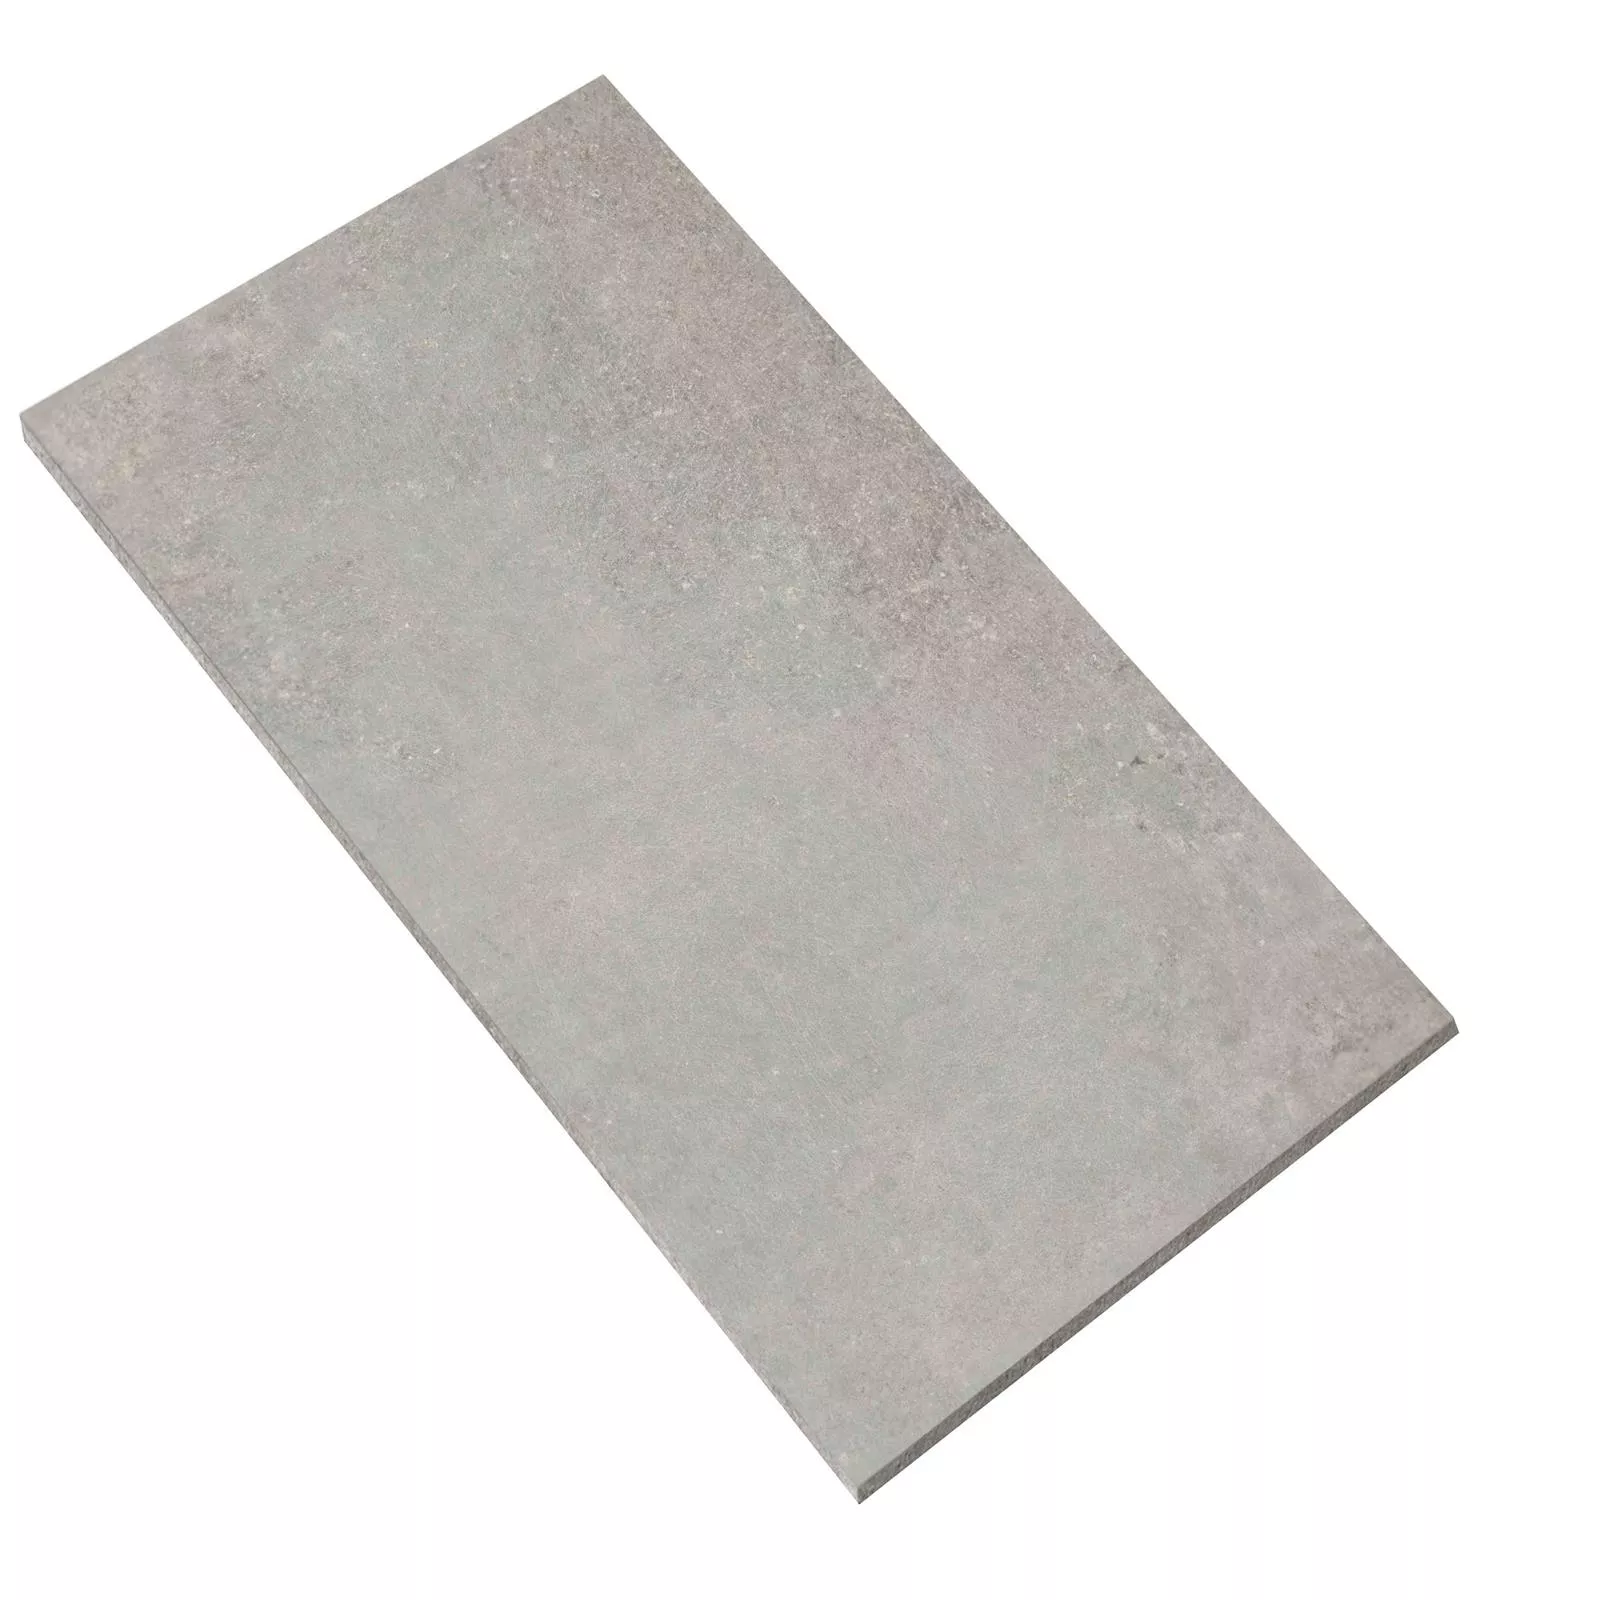 Floor Tiles Peaceway Grey 30x60cm